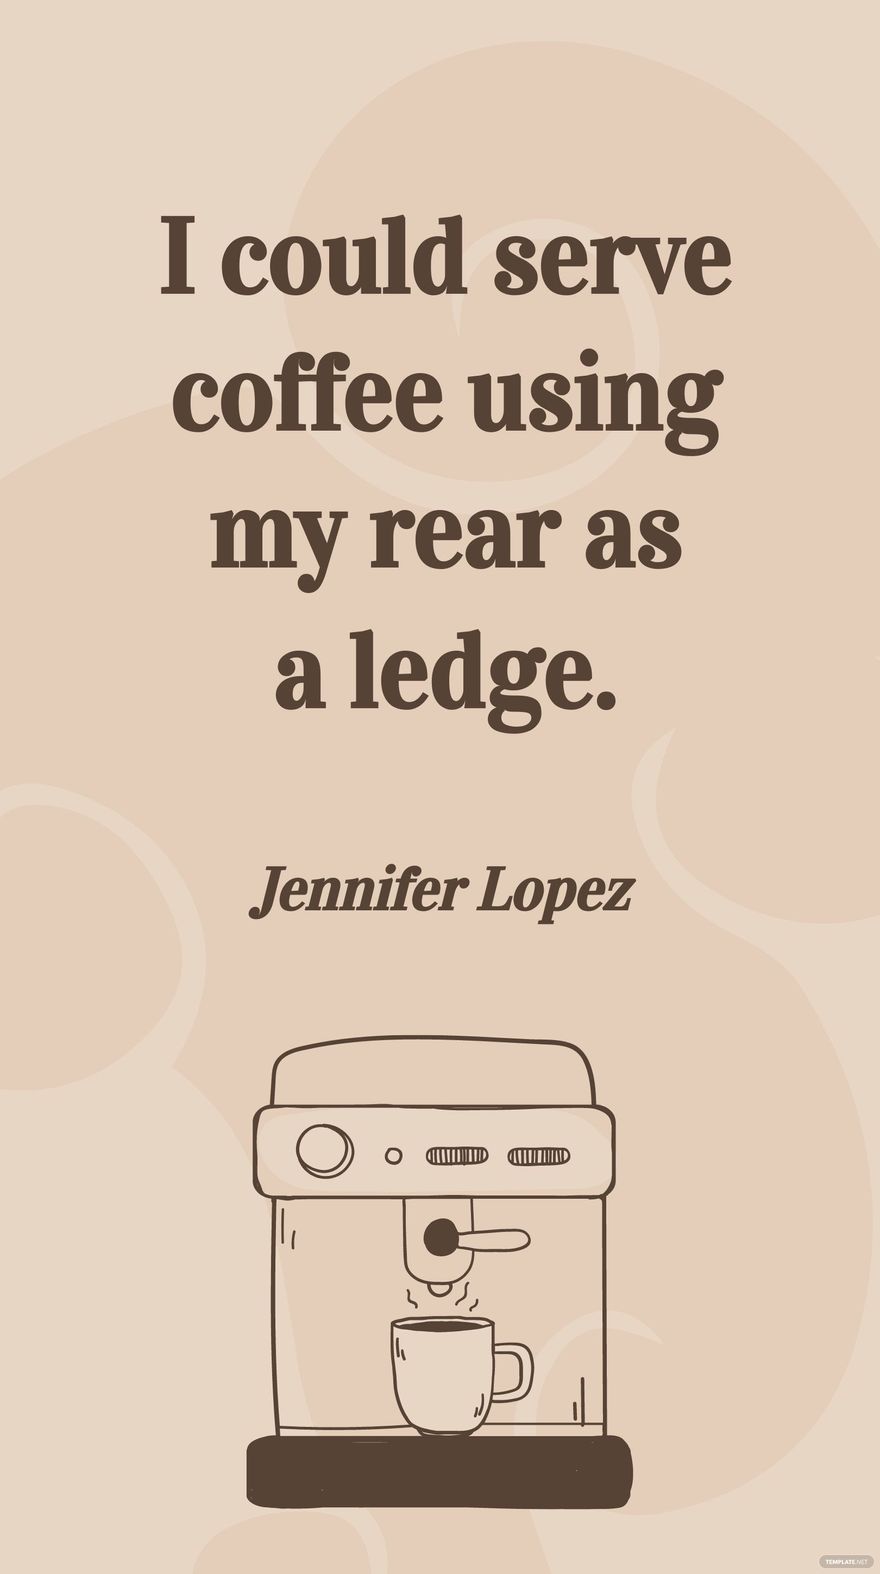 Jennifer Lopez - I could serve coffee using my rear as a ledge. in JPG